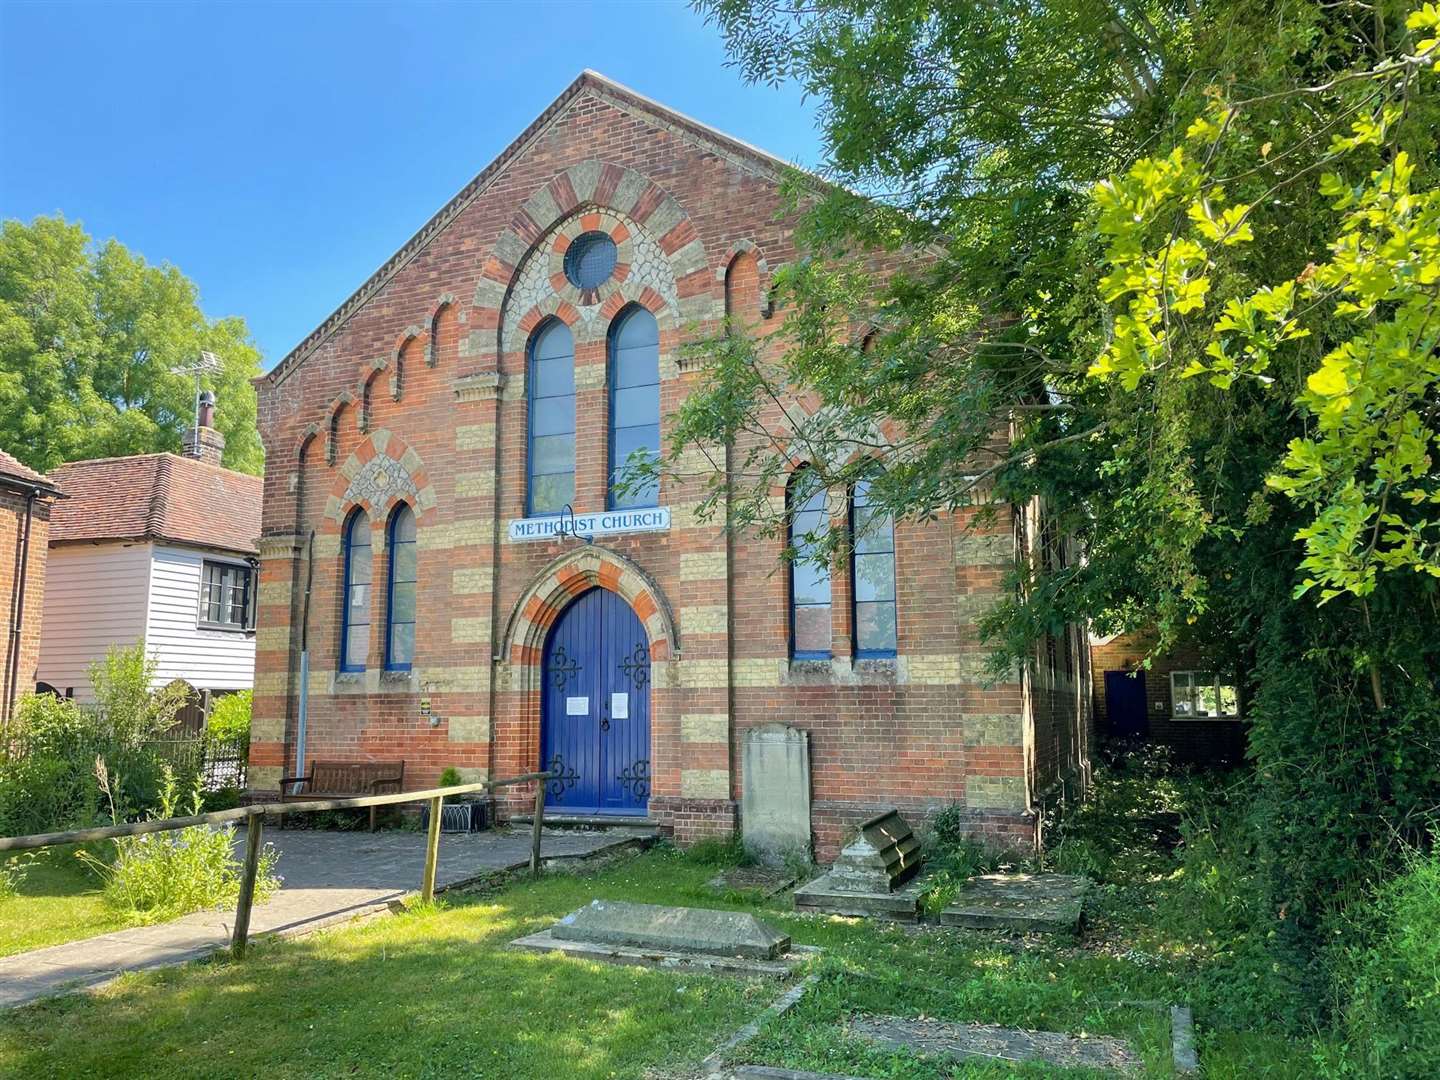 The former Methodist church in Headcorn